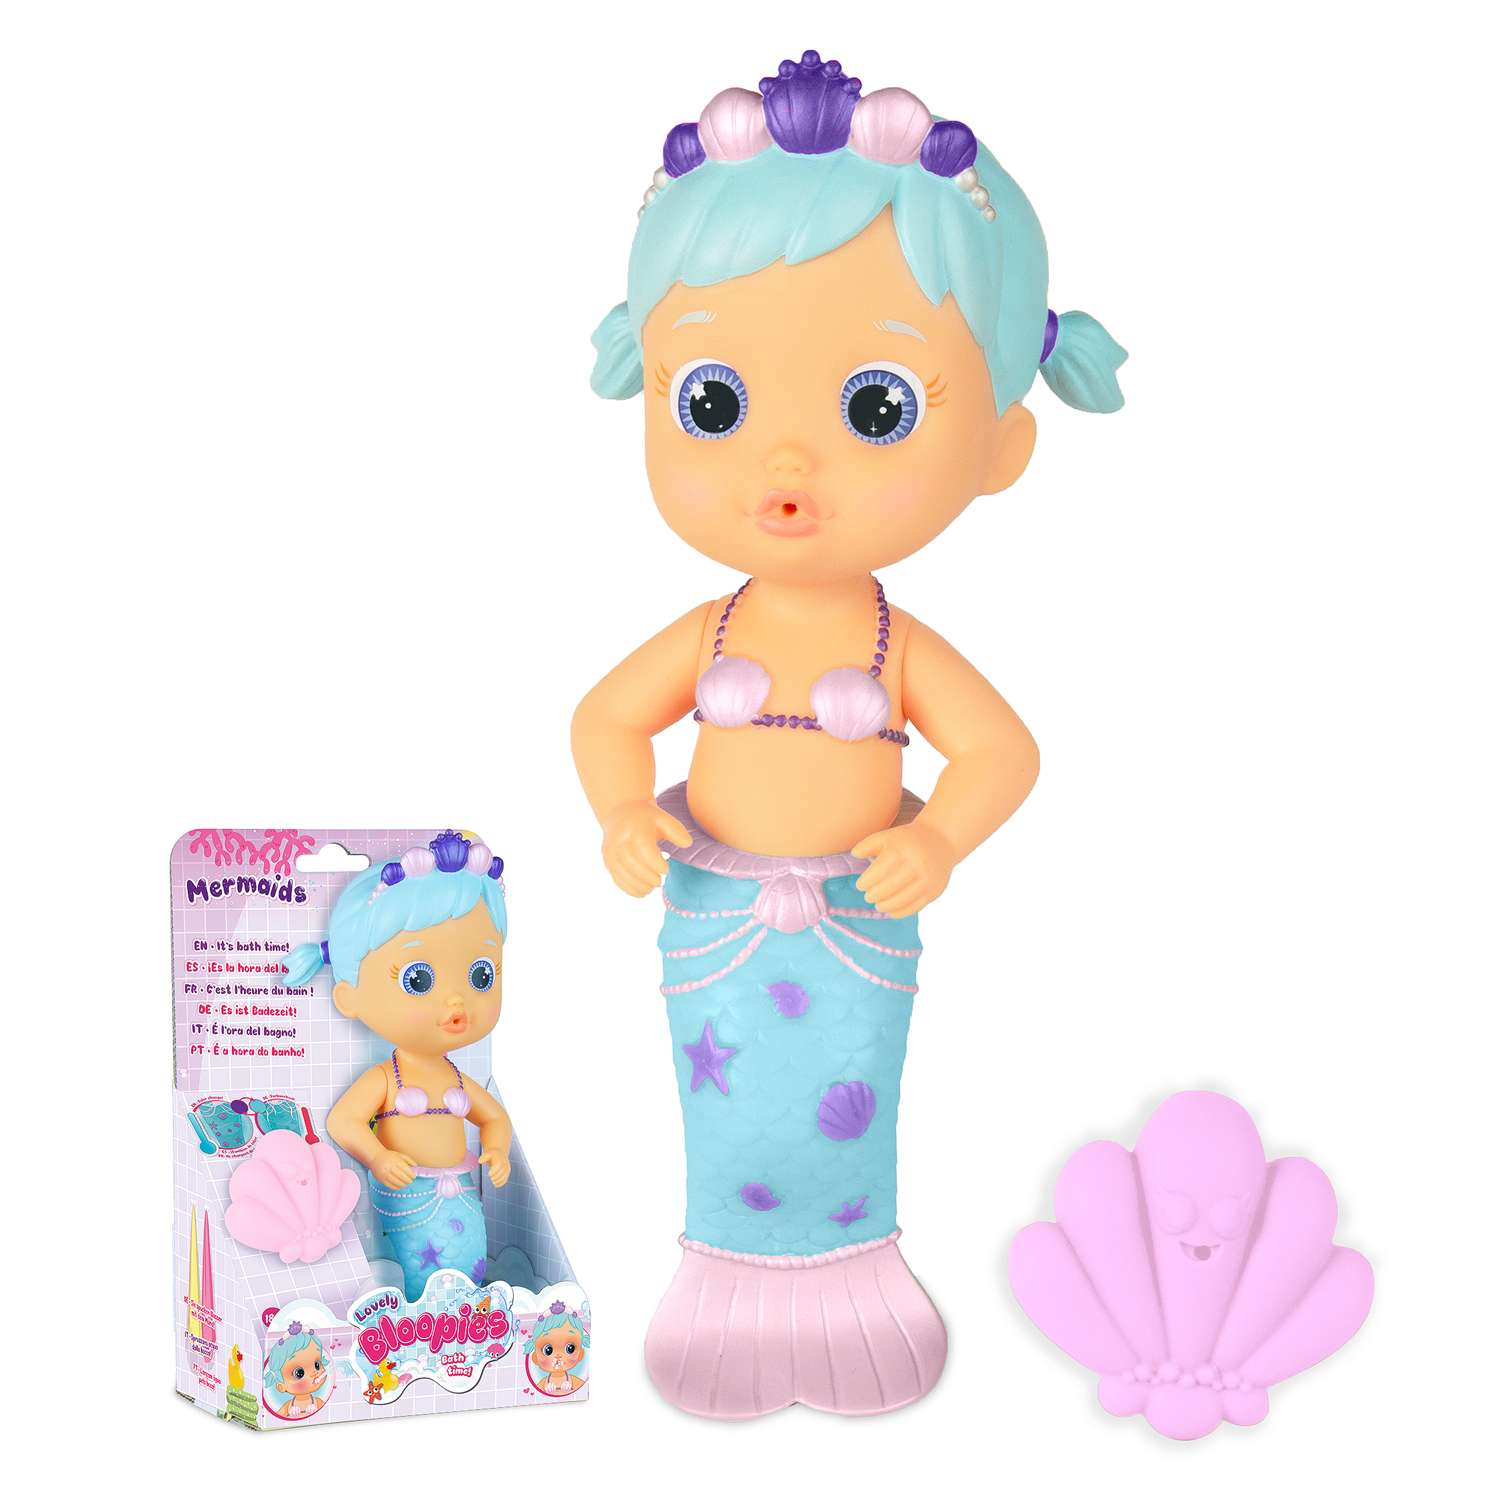 Кукла IMC Toys Bloopies для купания 99630 - фото 1